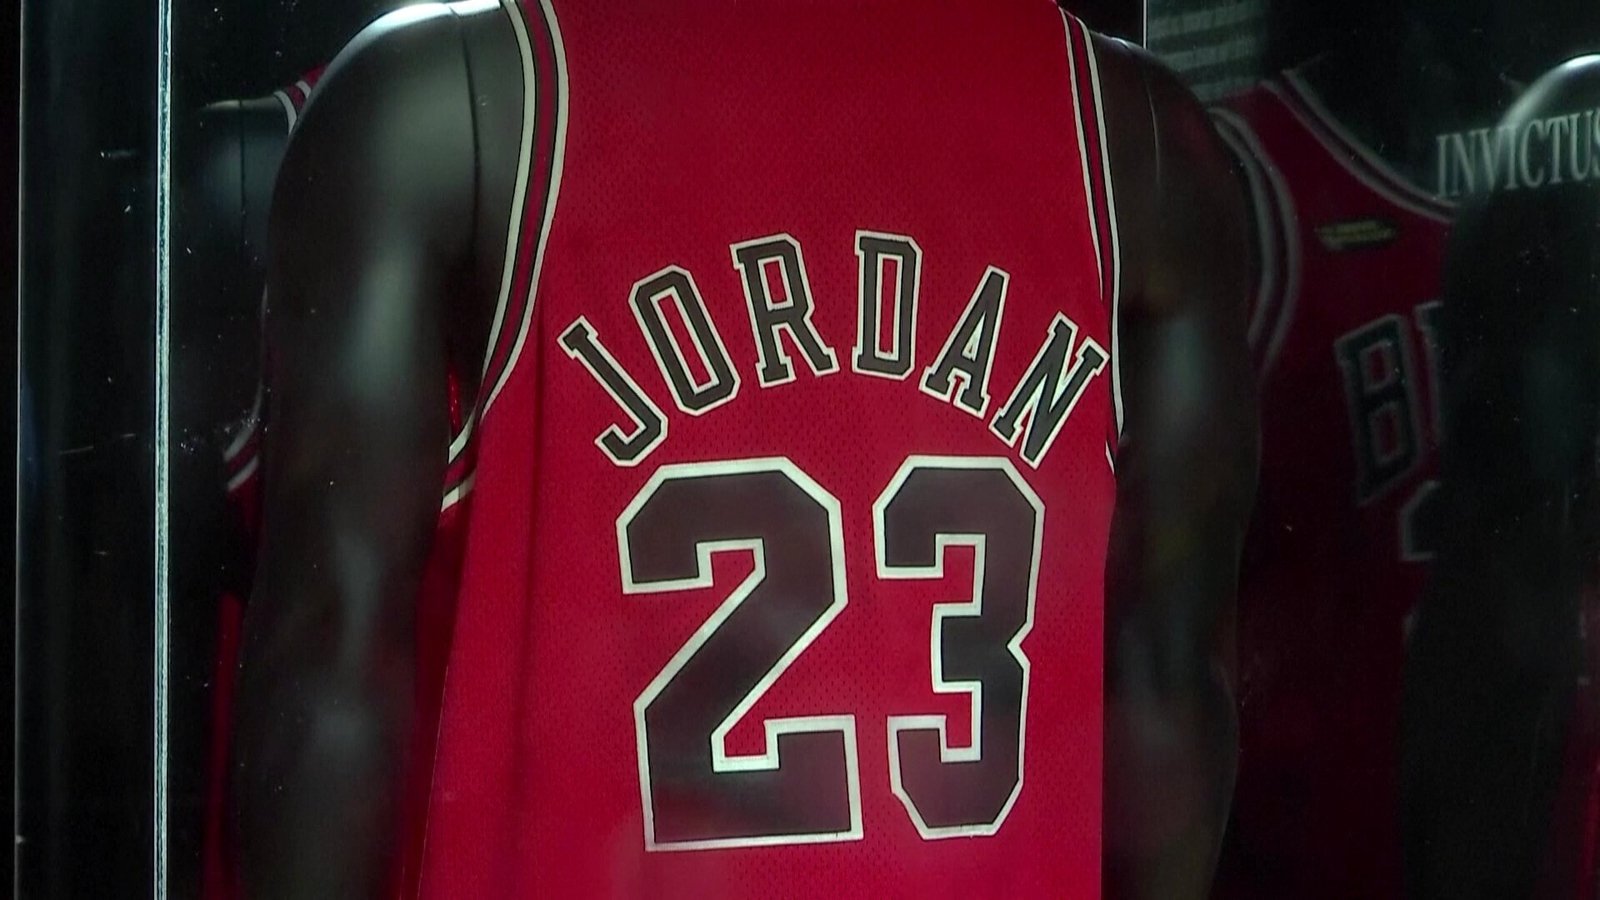 Michael Jordan 'Last Dance' Jersey Sells for Record $10.1M